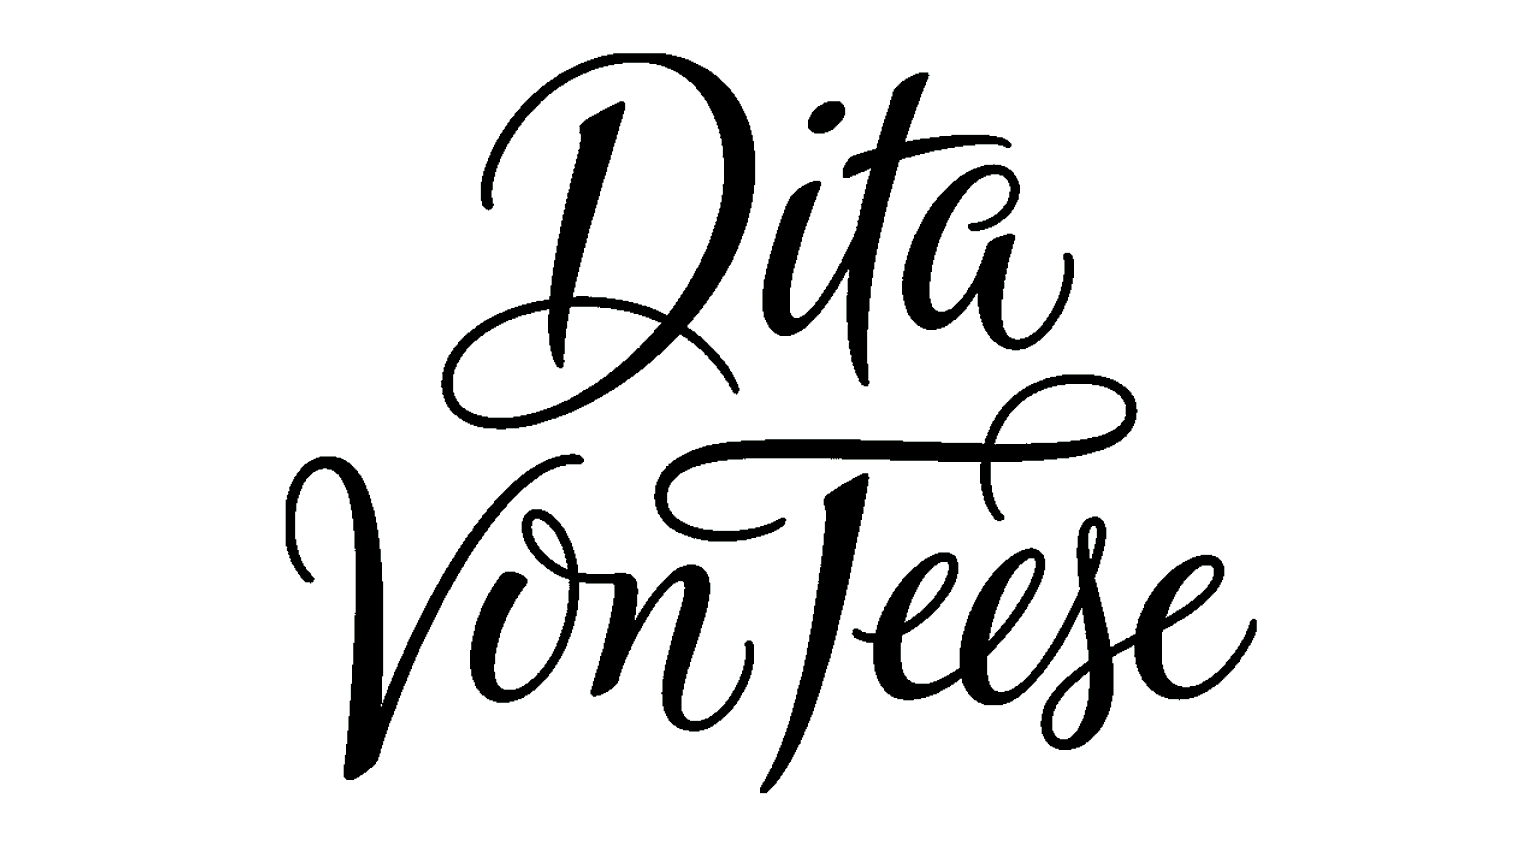 Dita Von Teese Logo